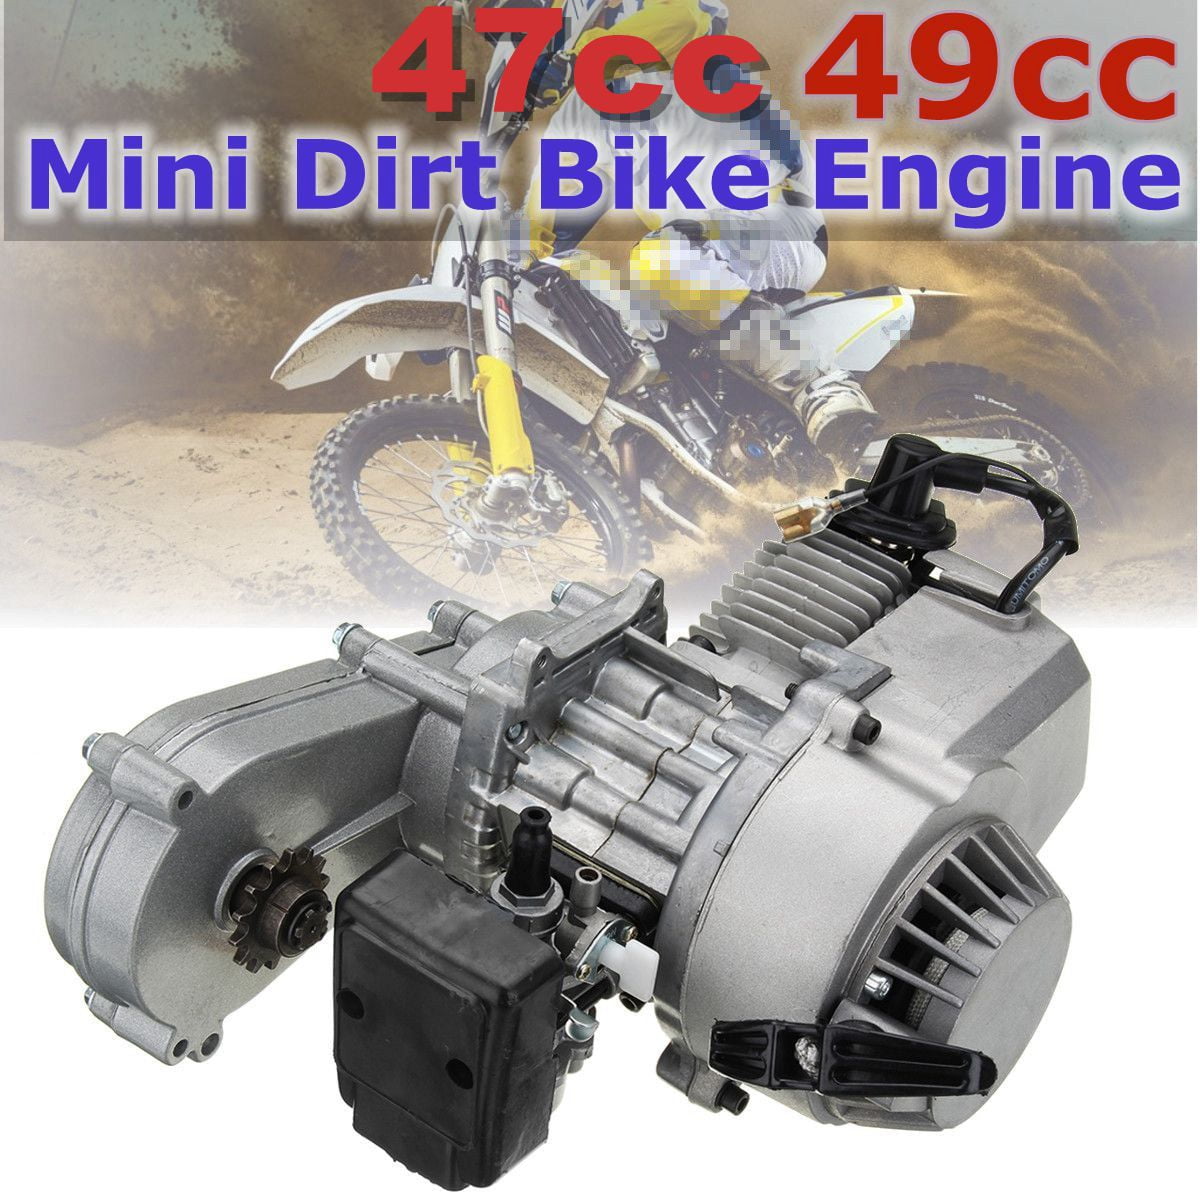 Engine Motor Kit 49Cc 2-Stroke Recoil Force Starts the Engine Motor for Pocket Bike Mini Dirt Bike Atv Scooter 